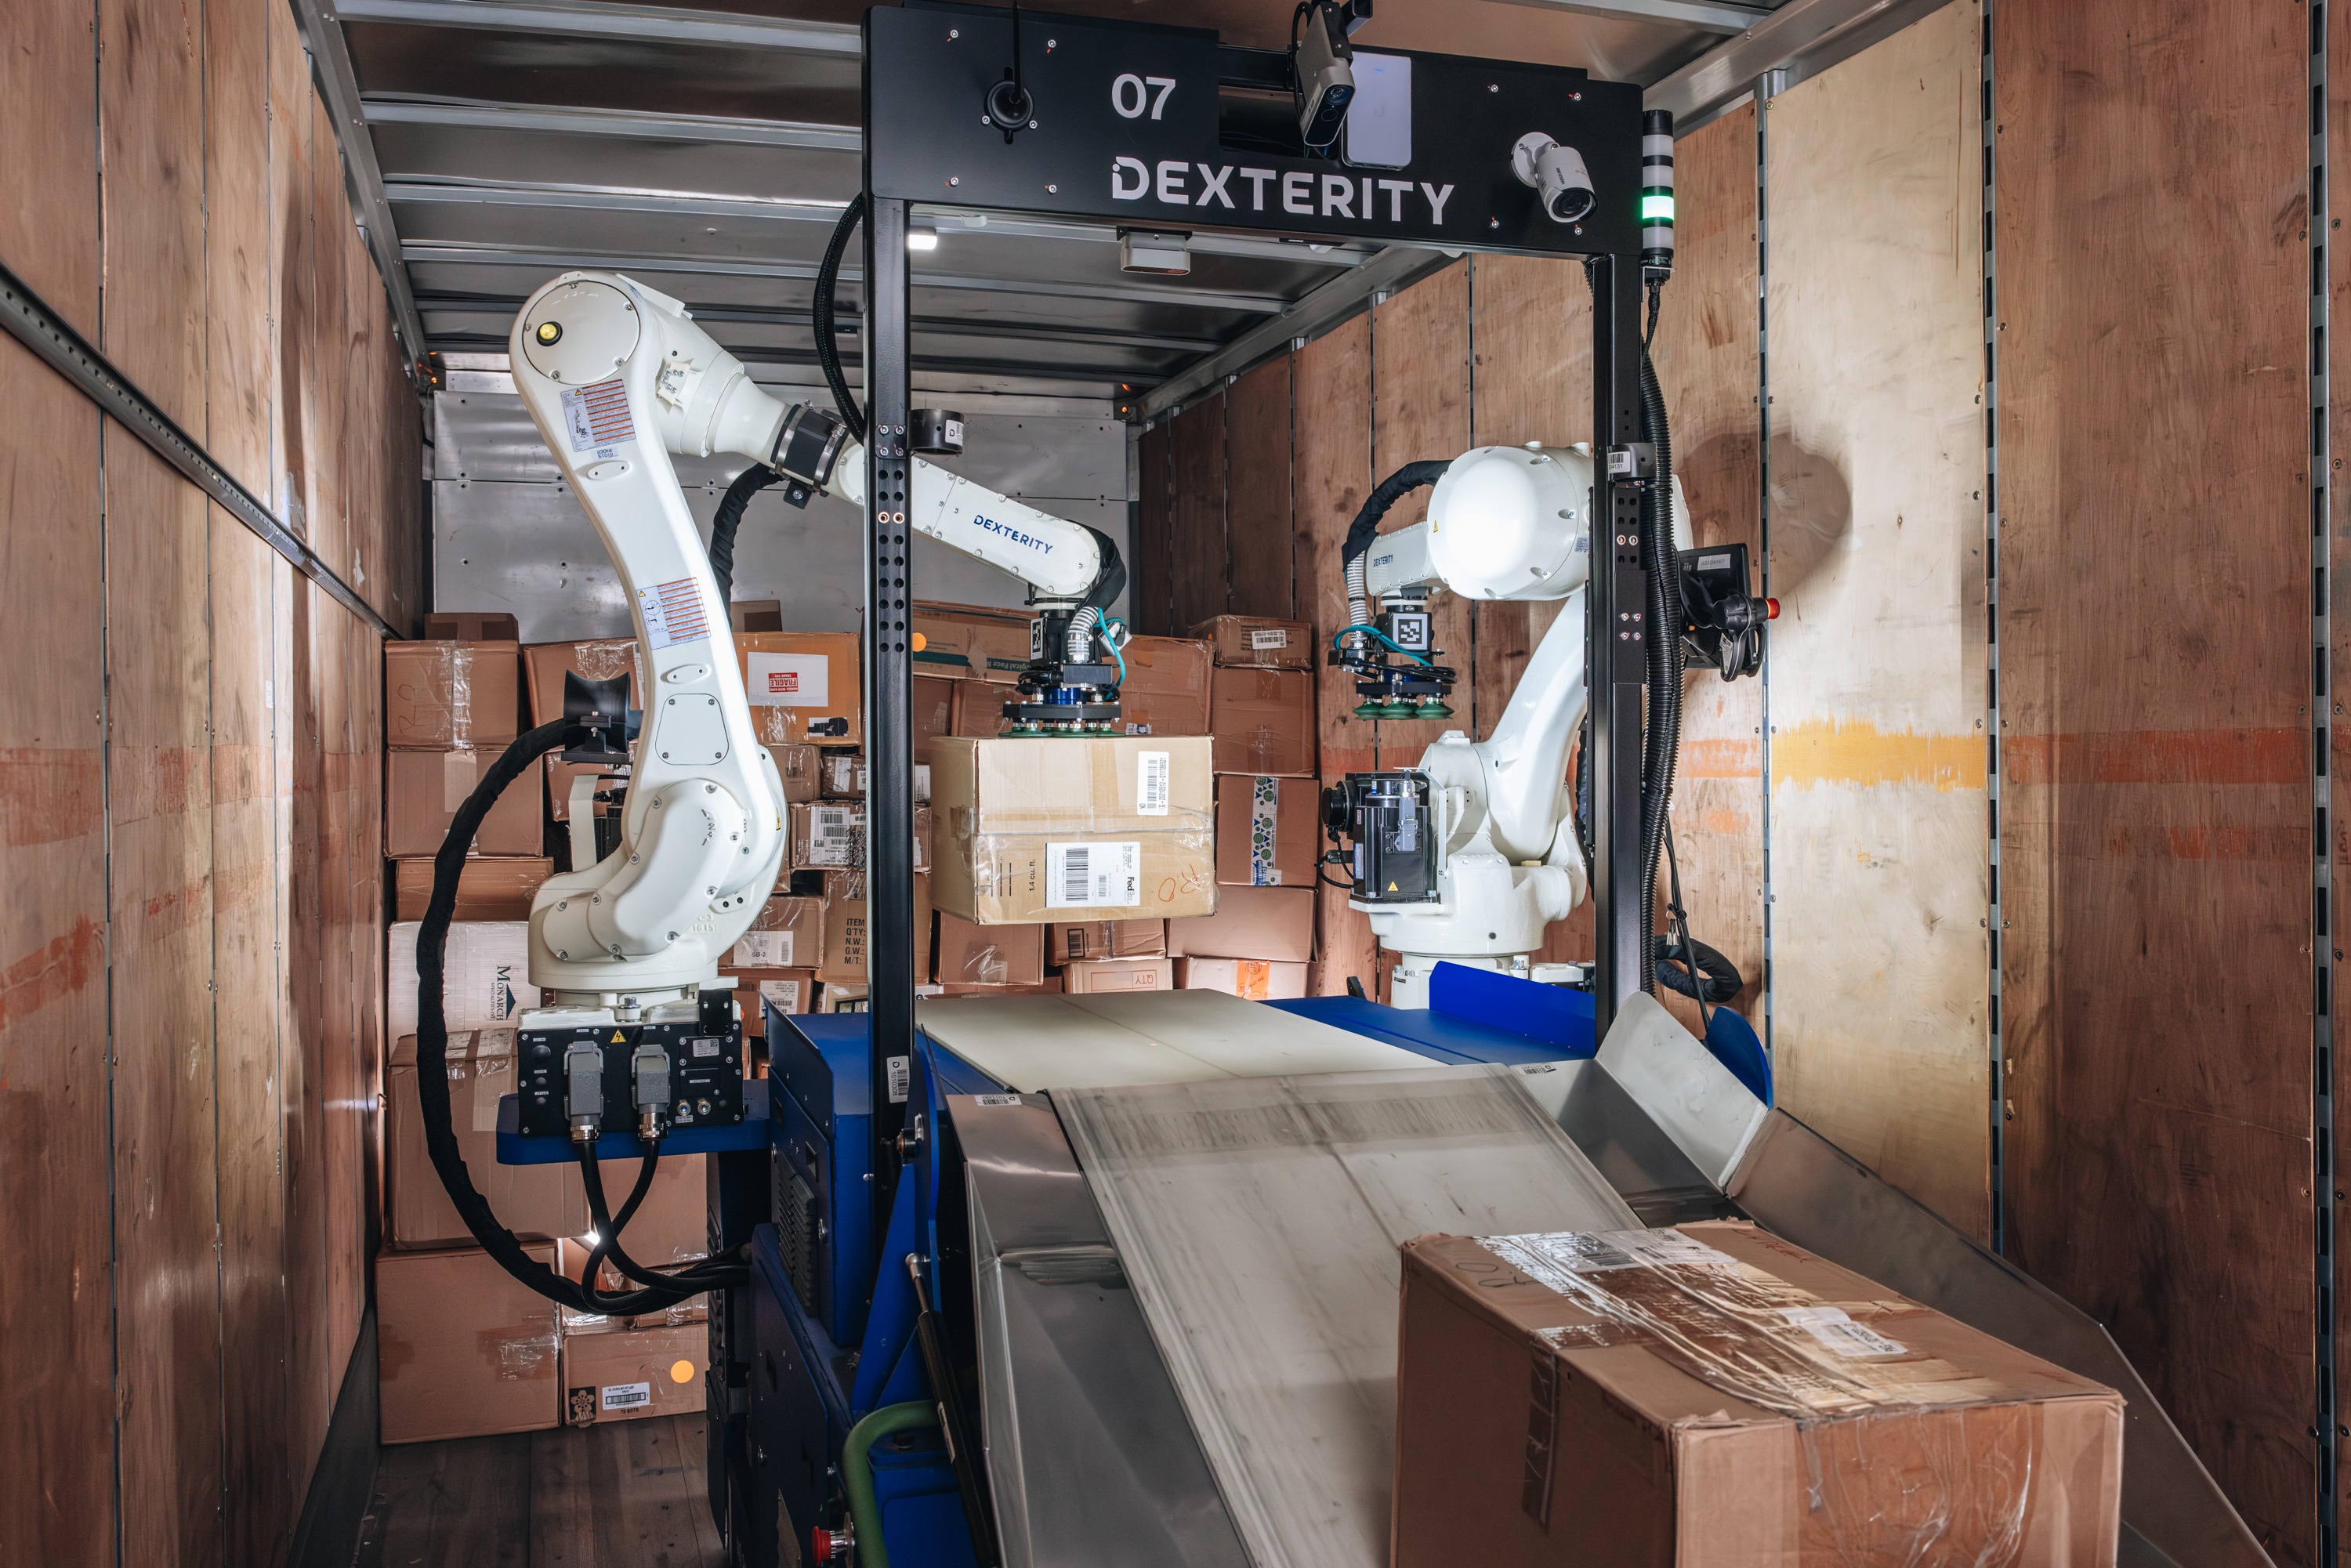 Dexterityの開発したロボットがトラック内荷積みを行う様子